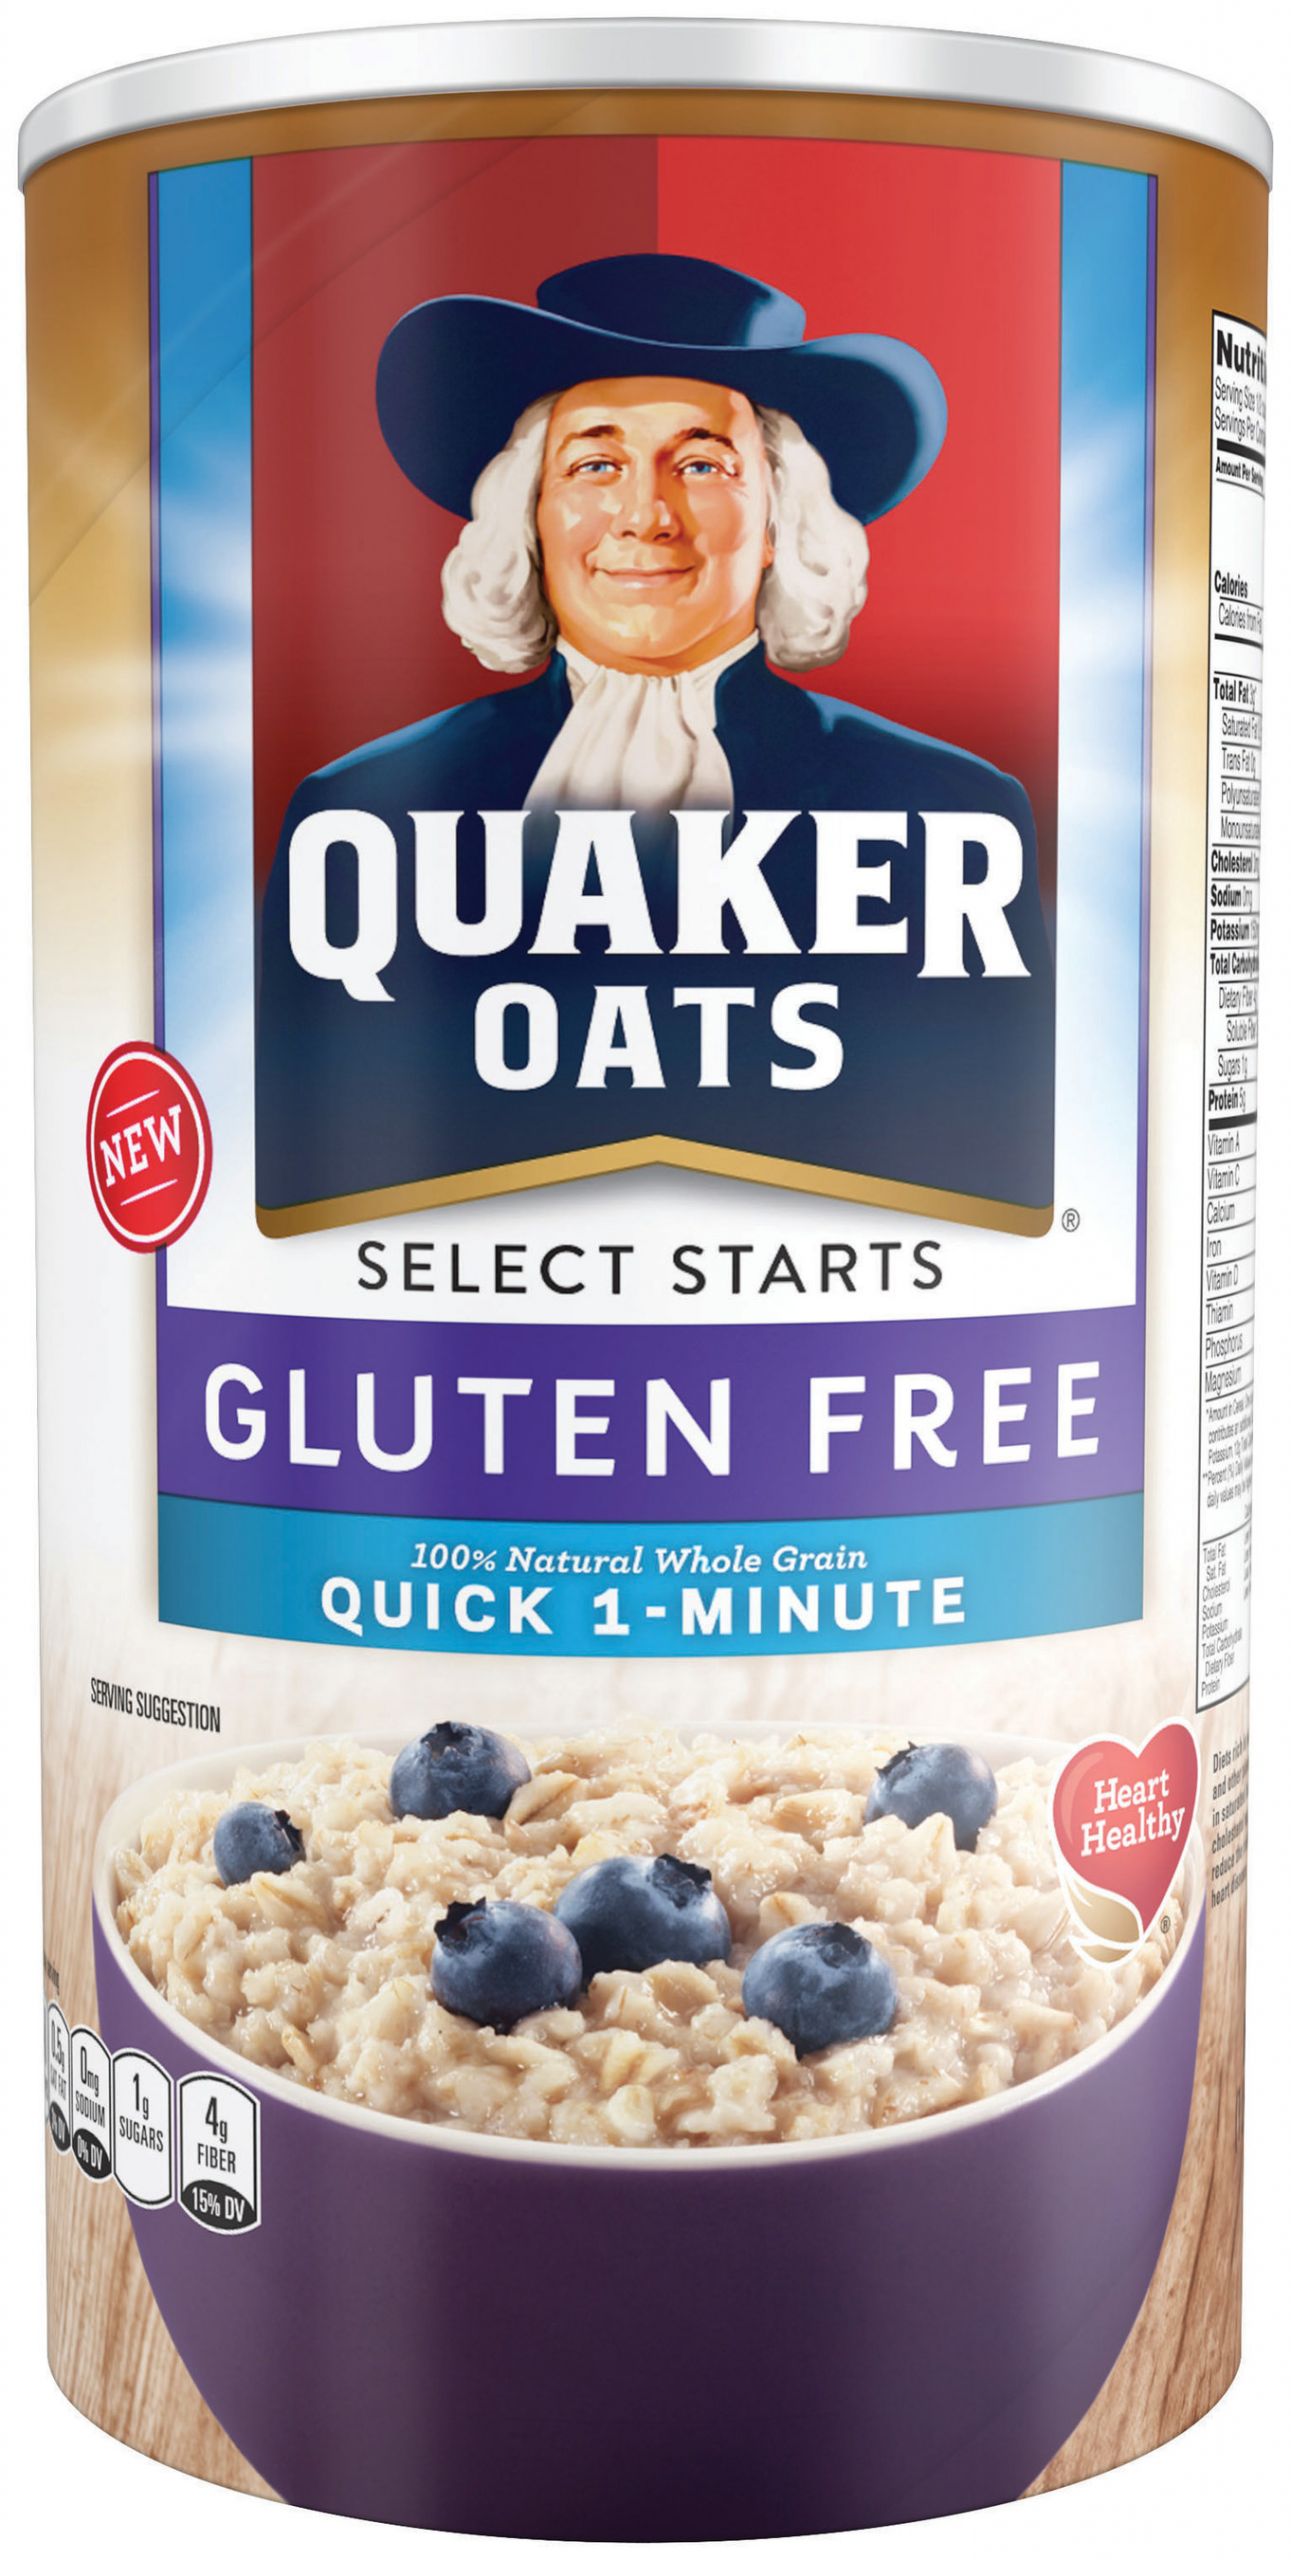 Gluten Free Quaker Oats
 Quaker Introduces New Great Tasting Gluten Free Oatmeal